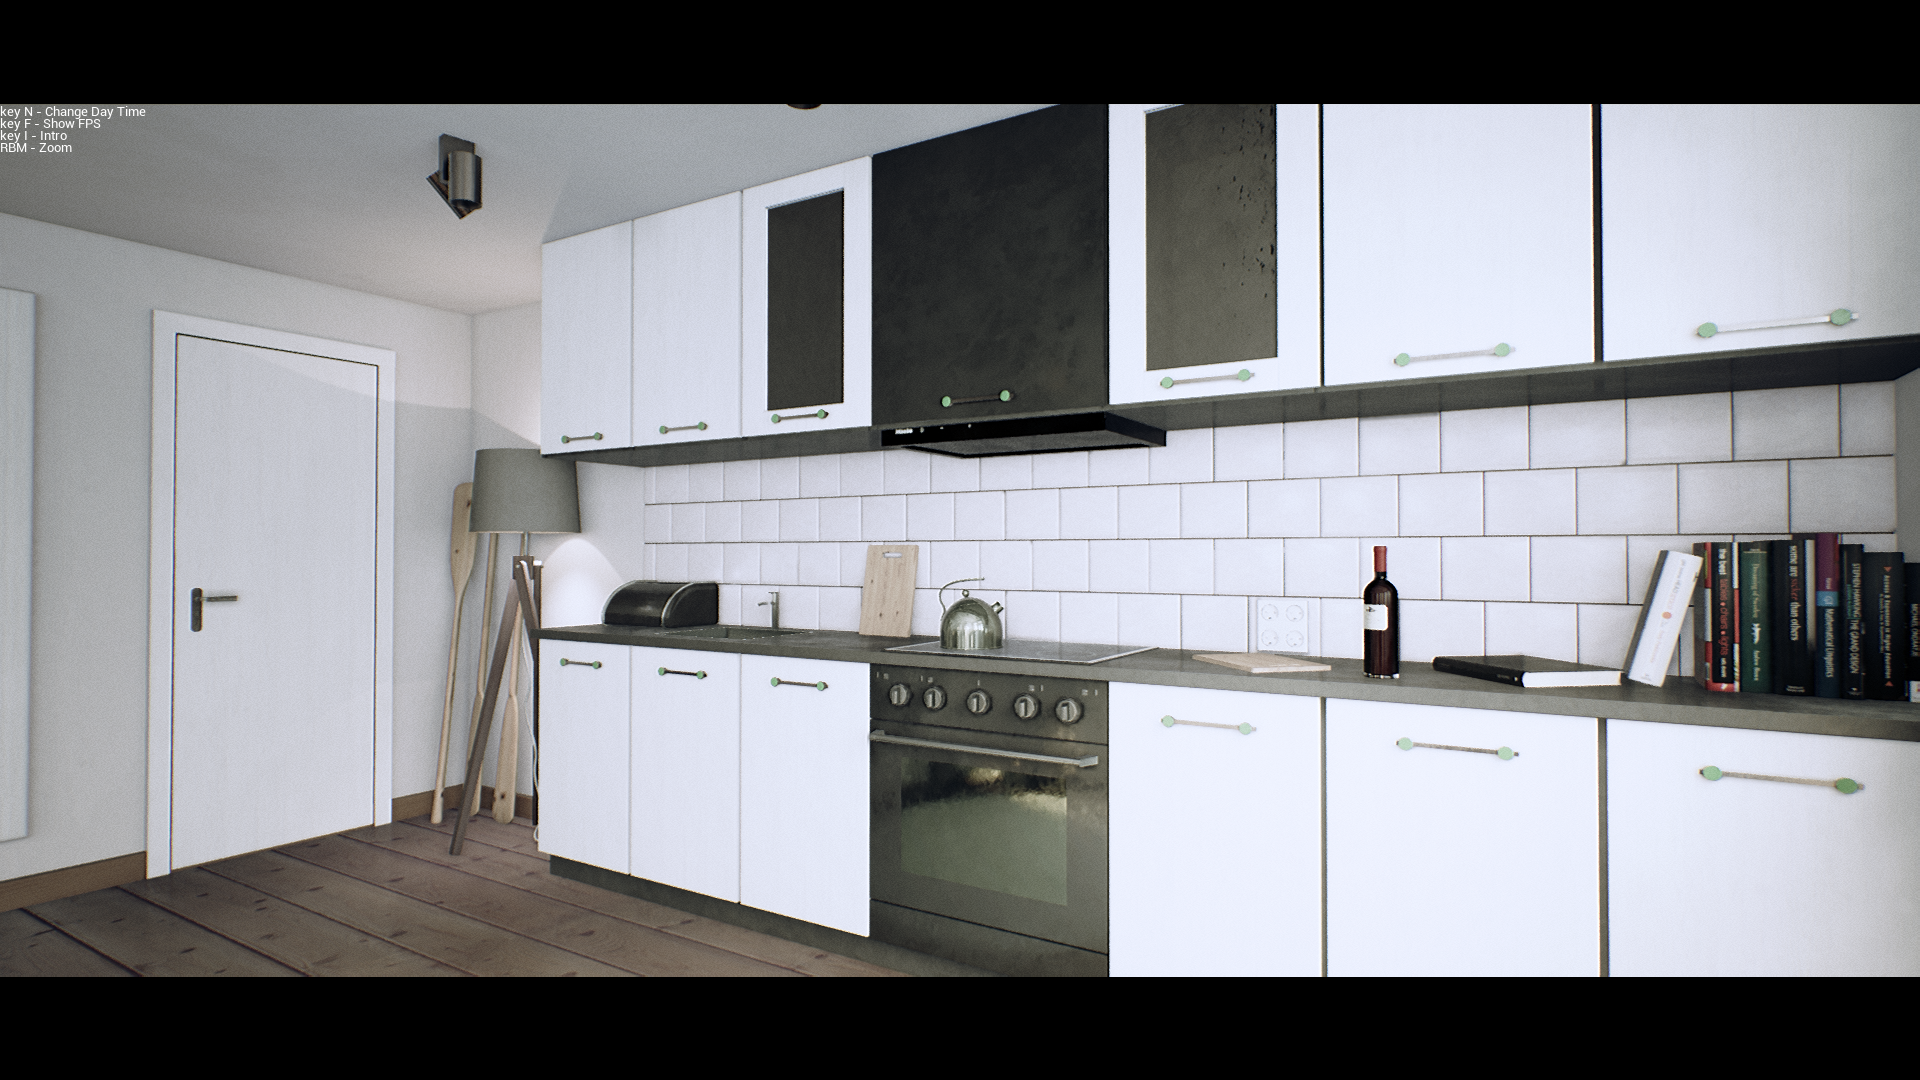 General 1920x1080 Unreal Engine 4  Archviz kitchen room indoors digital art CGI